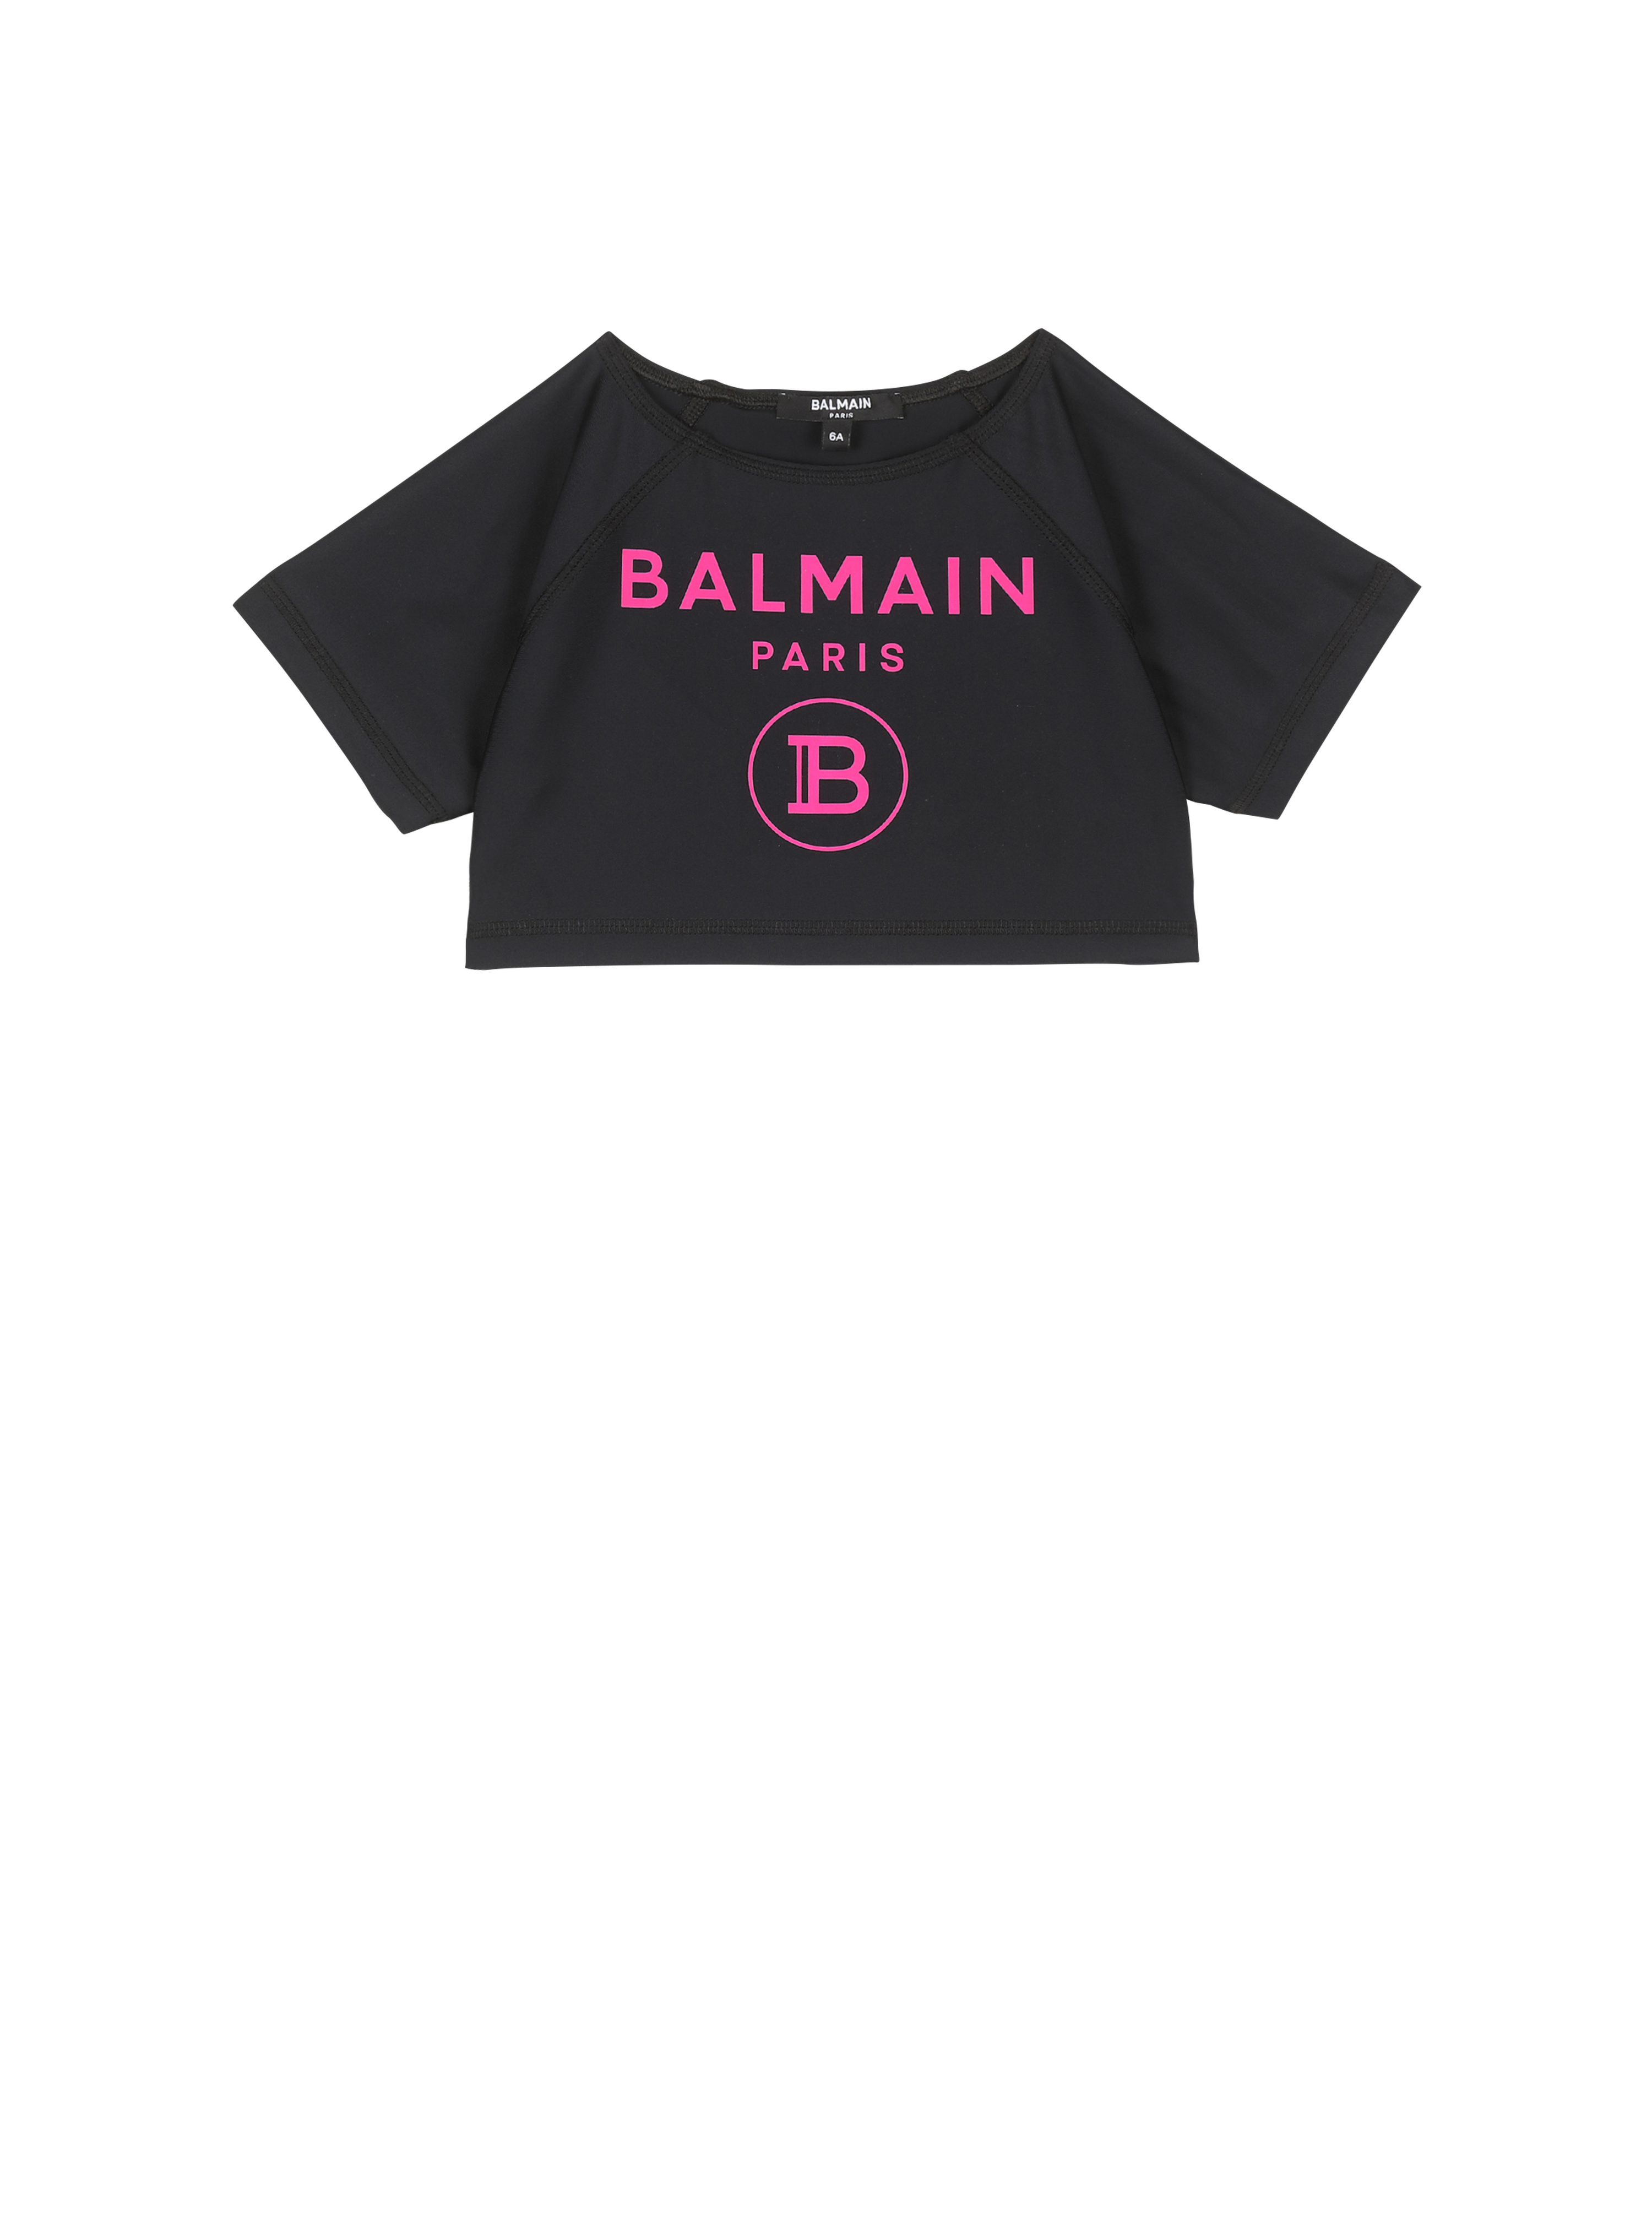 T-shirt da bagno con logo Balmain, nero